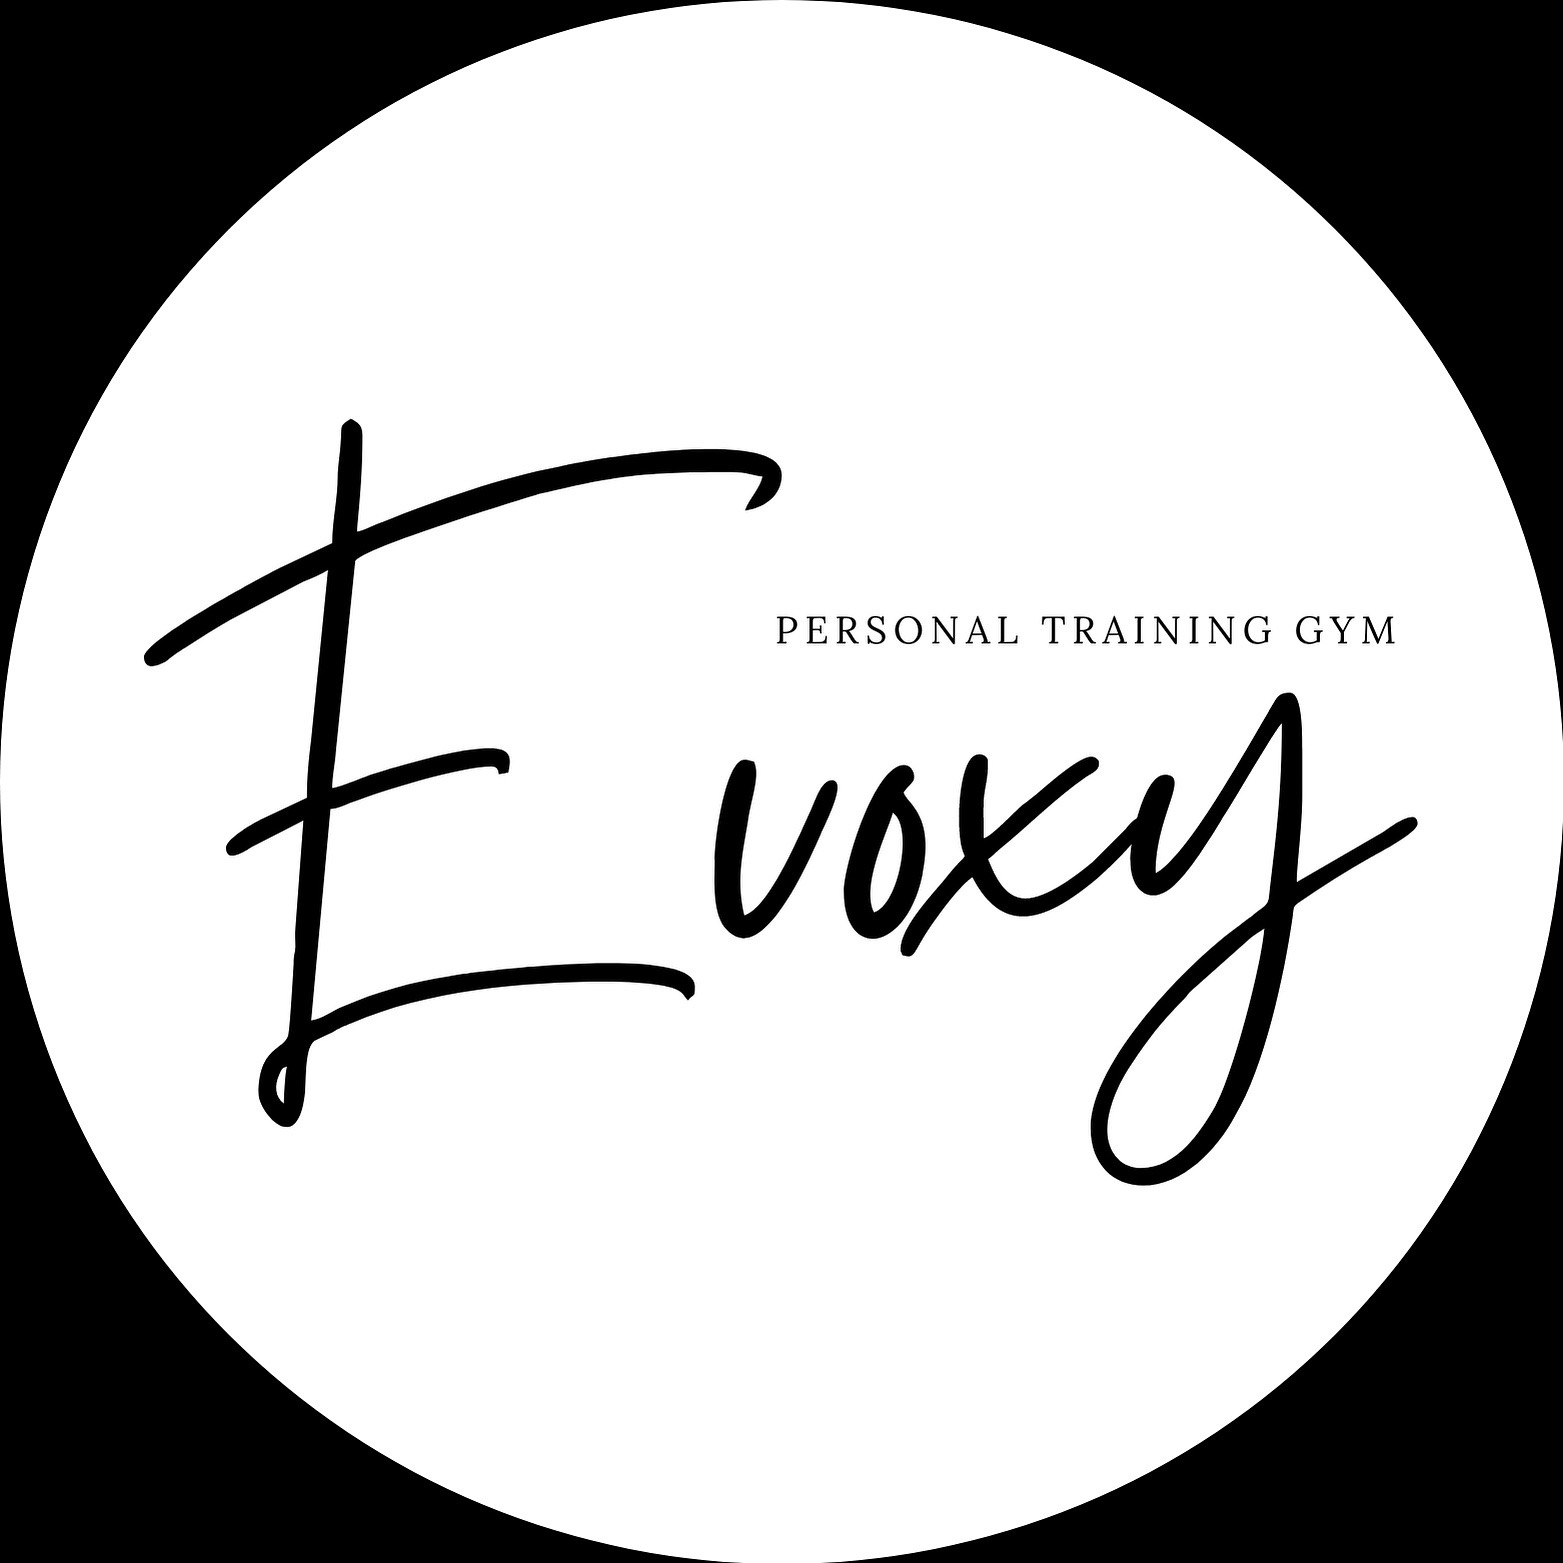 Personal Training Gym EVOXY